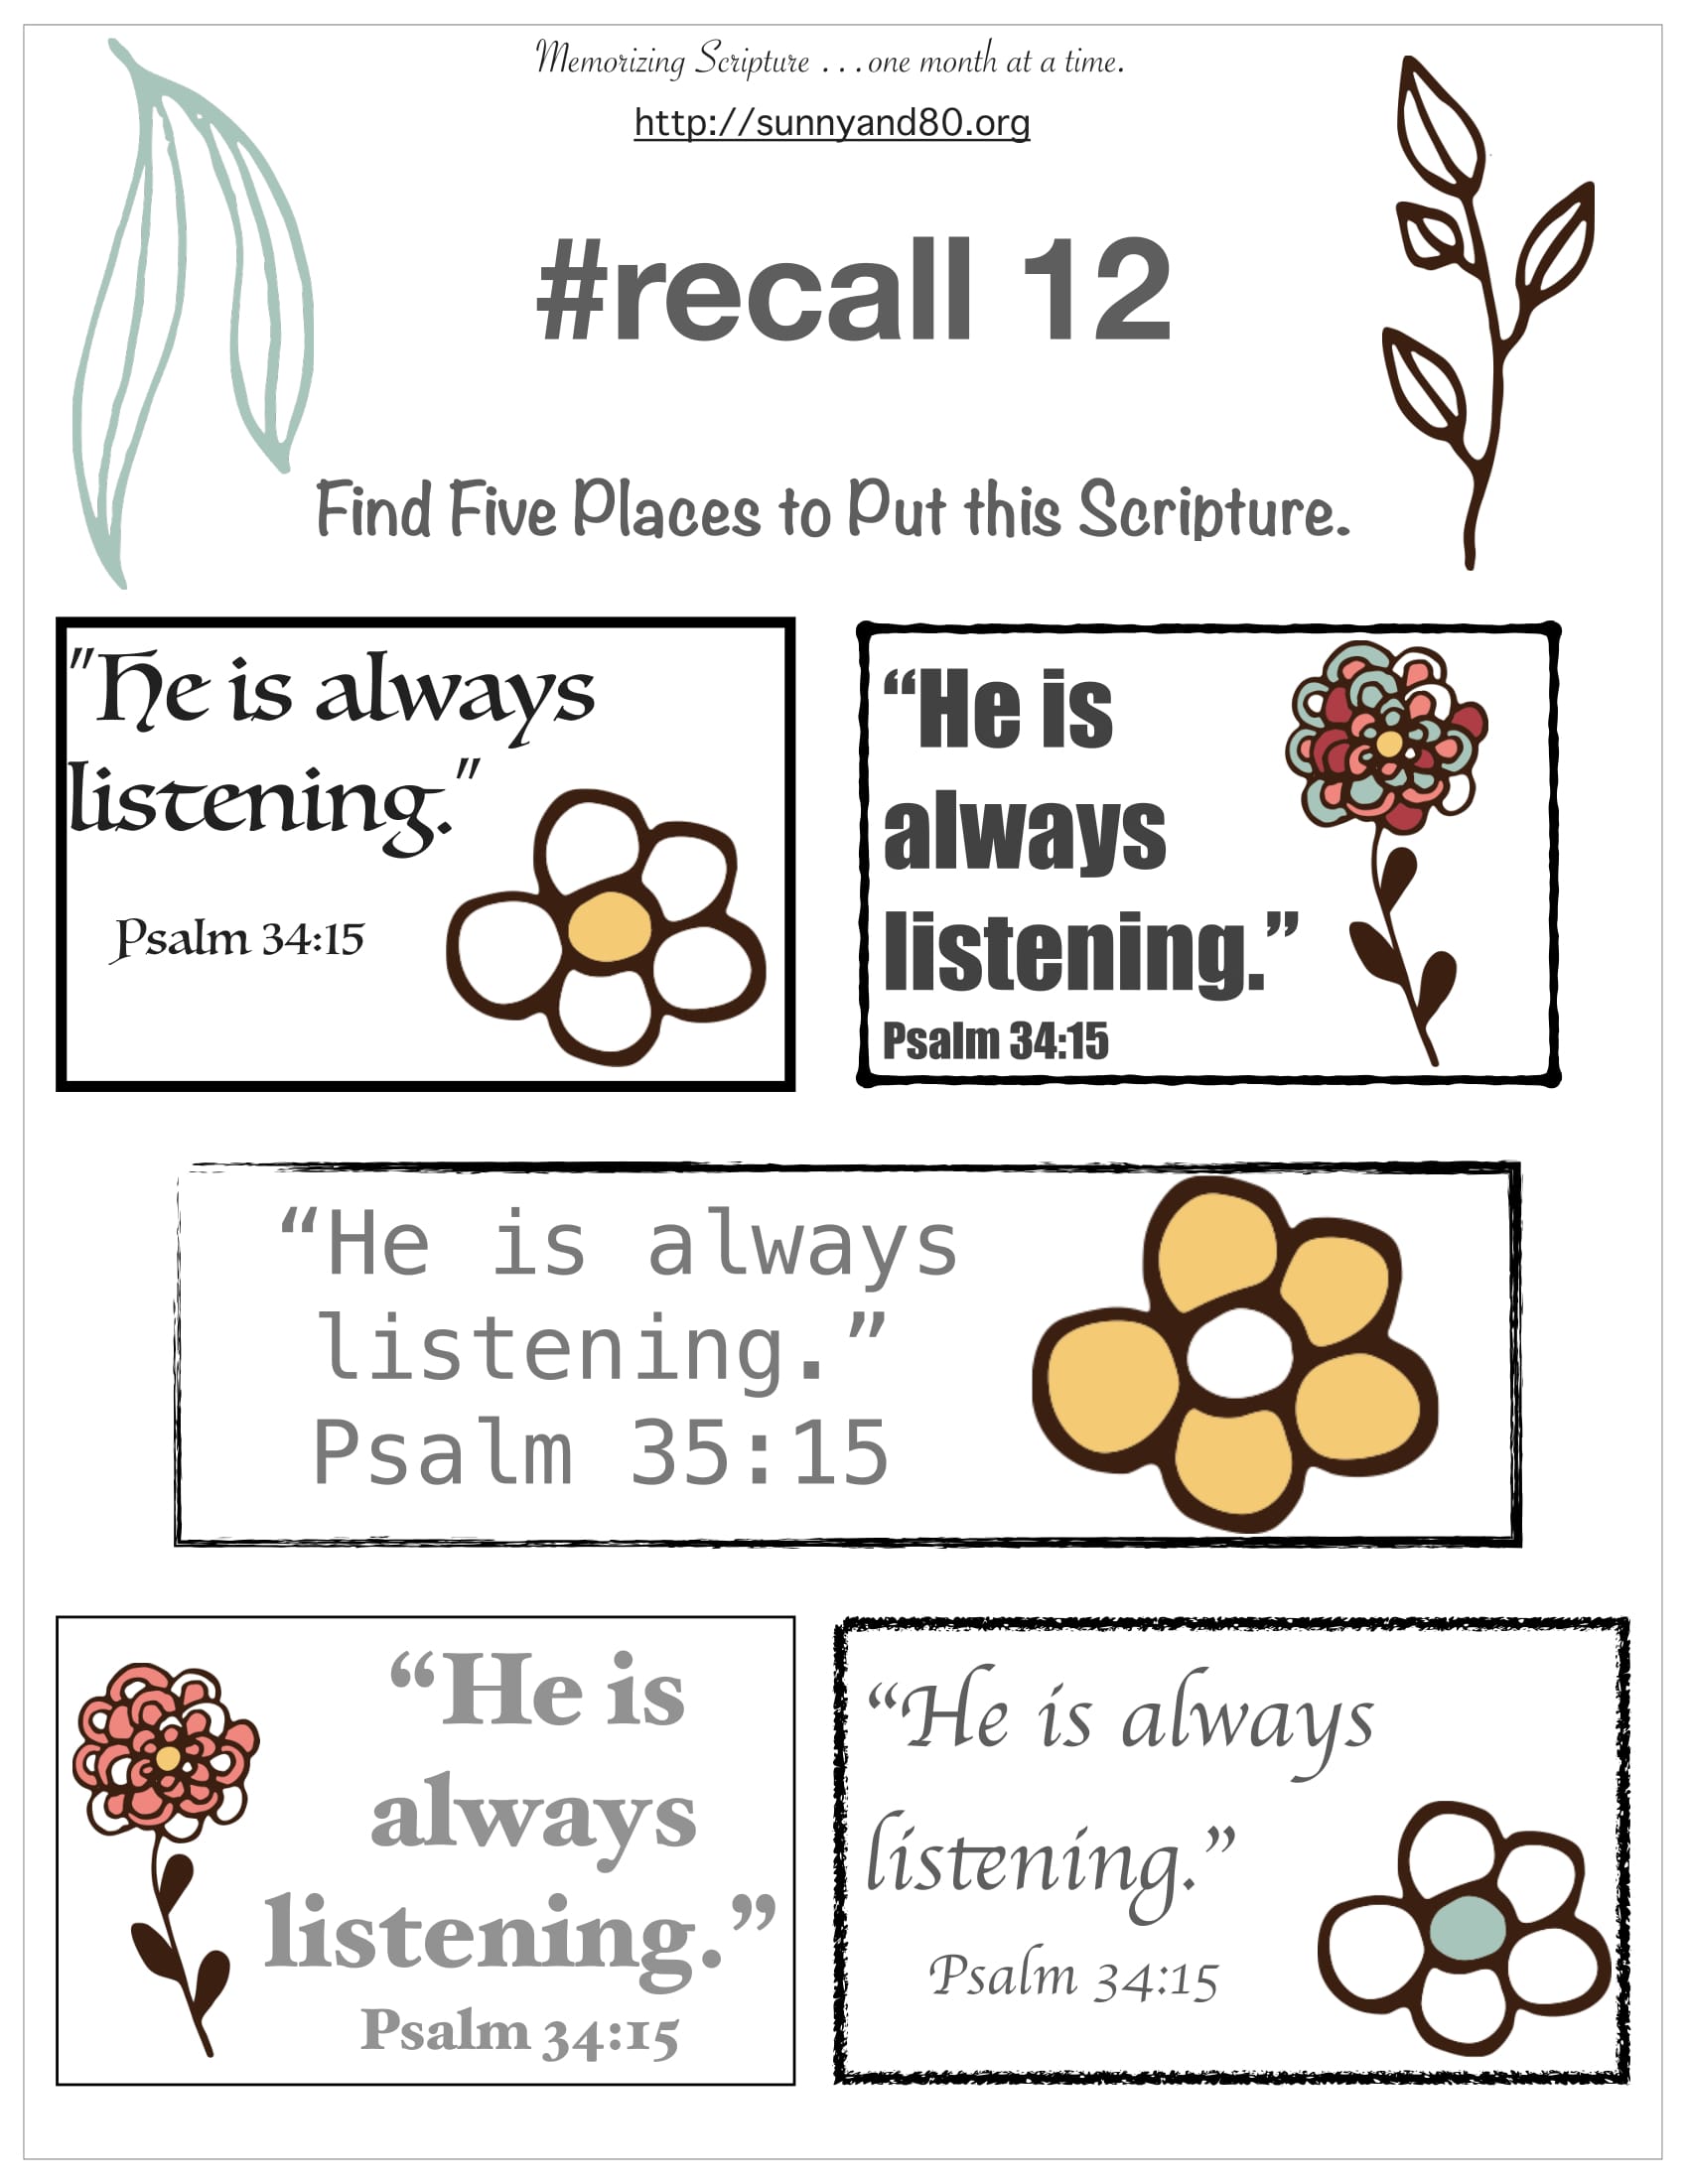 may-recall12-verse-cards-jpg-1